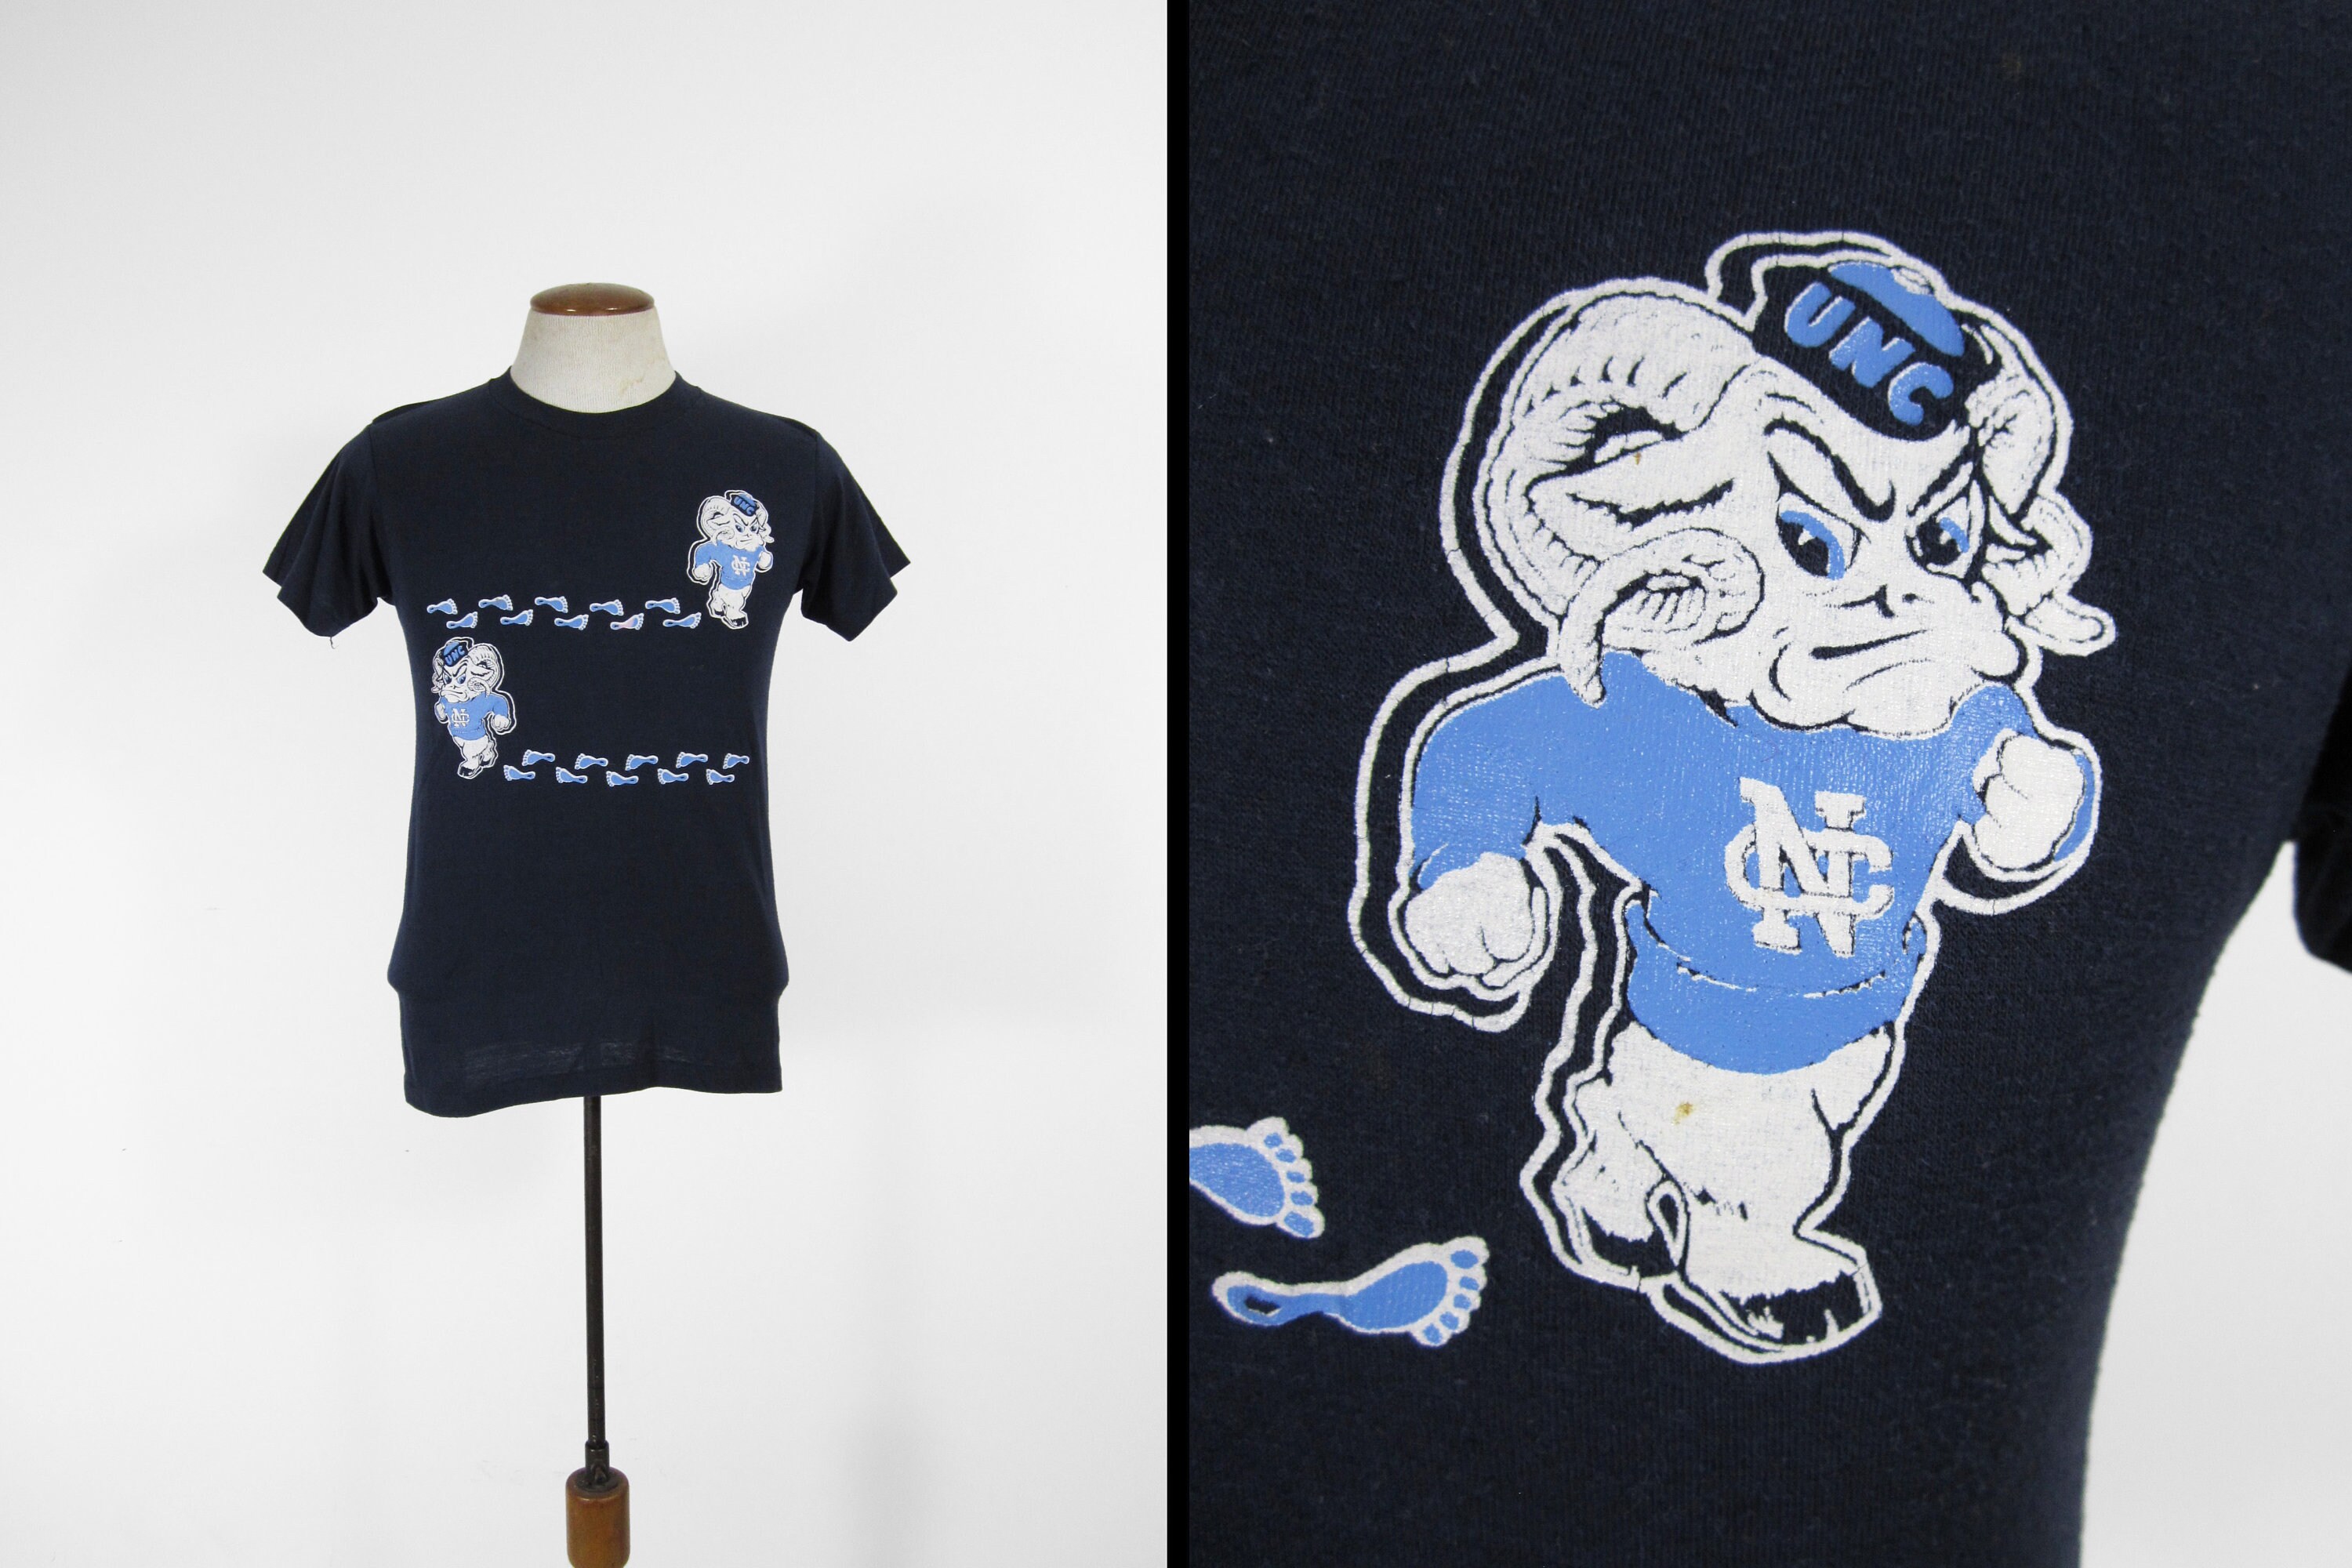 Vintage Unc Tar Heels T-Shirt 80S Ram College Football Tee - Small/Medium